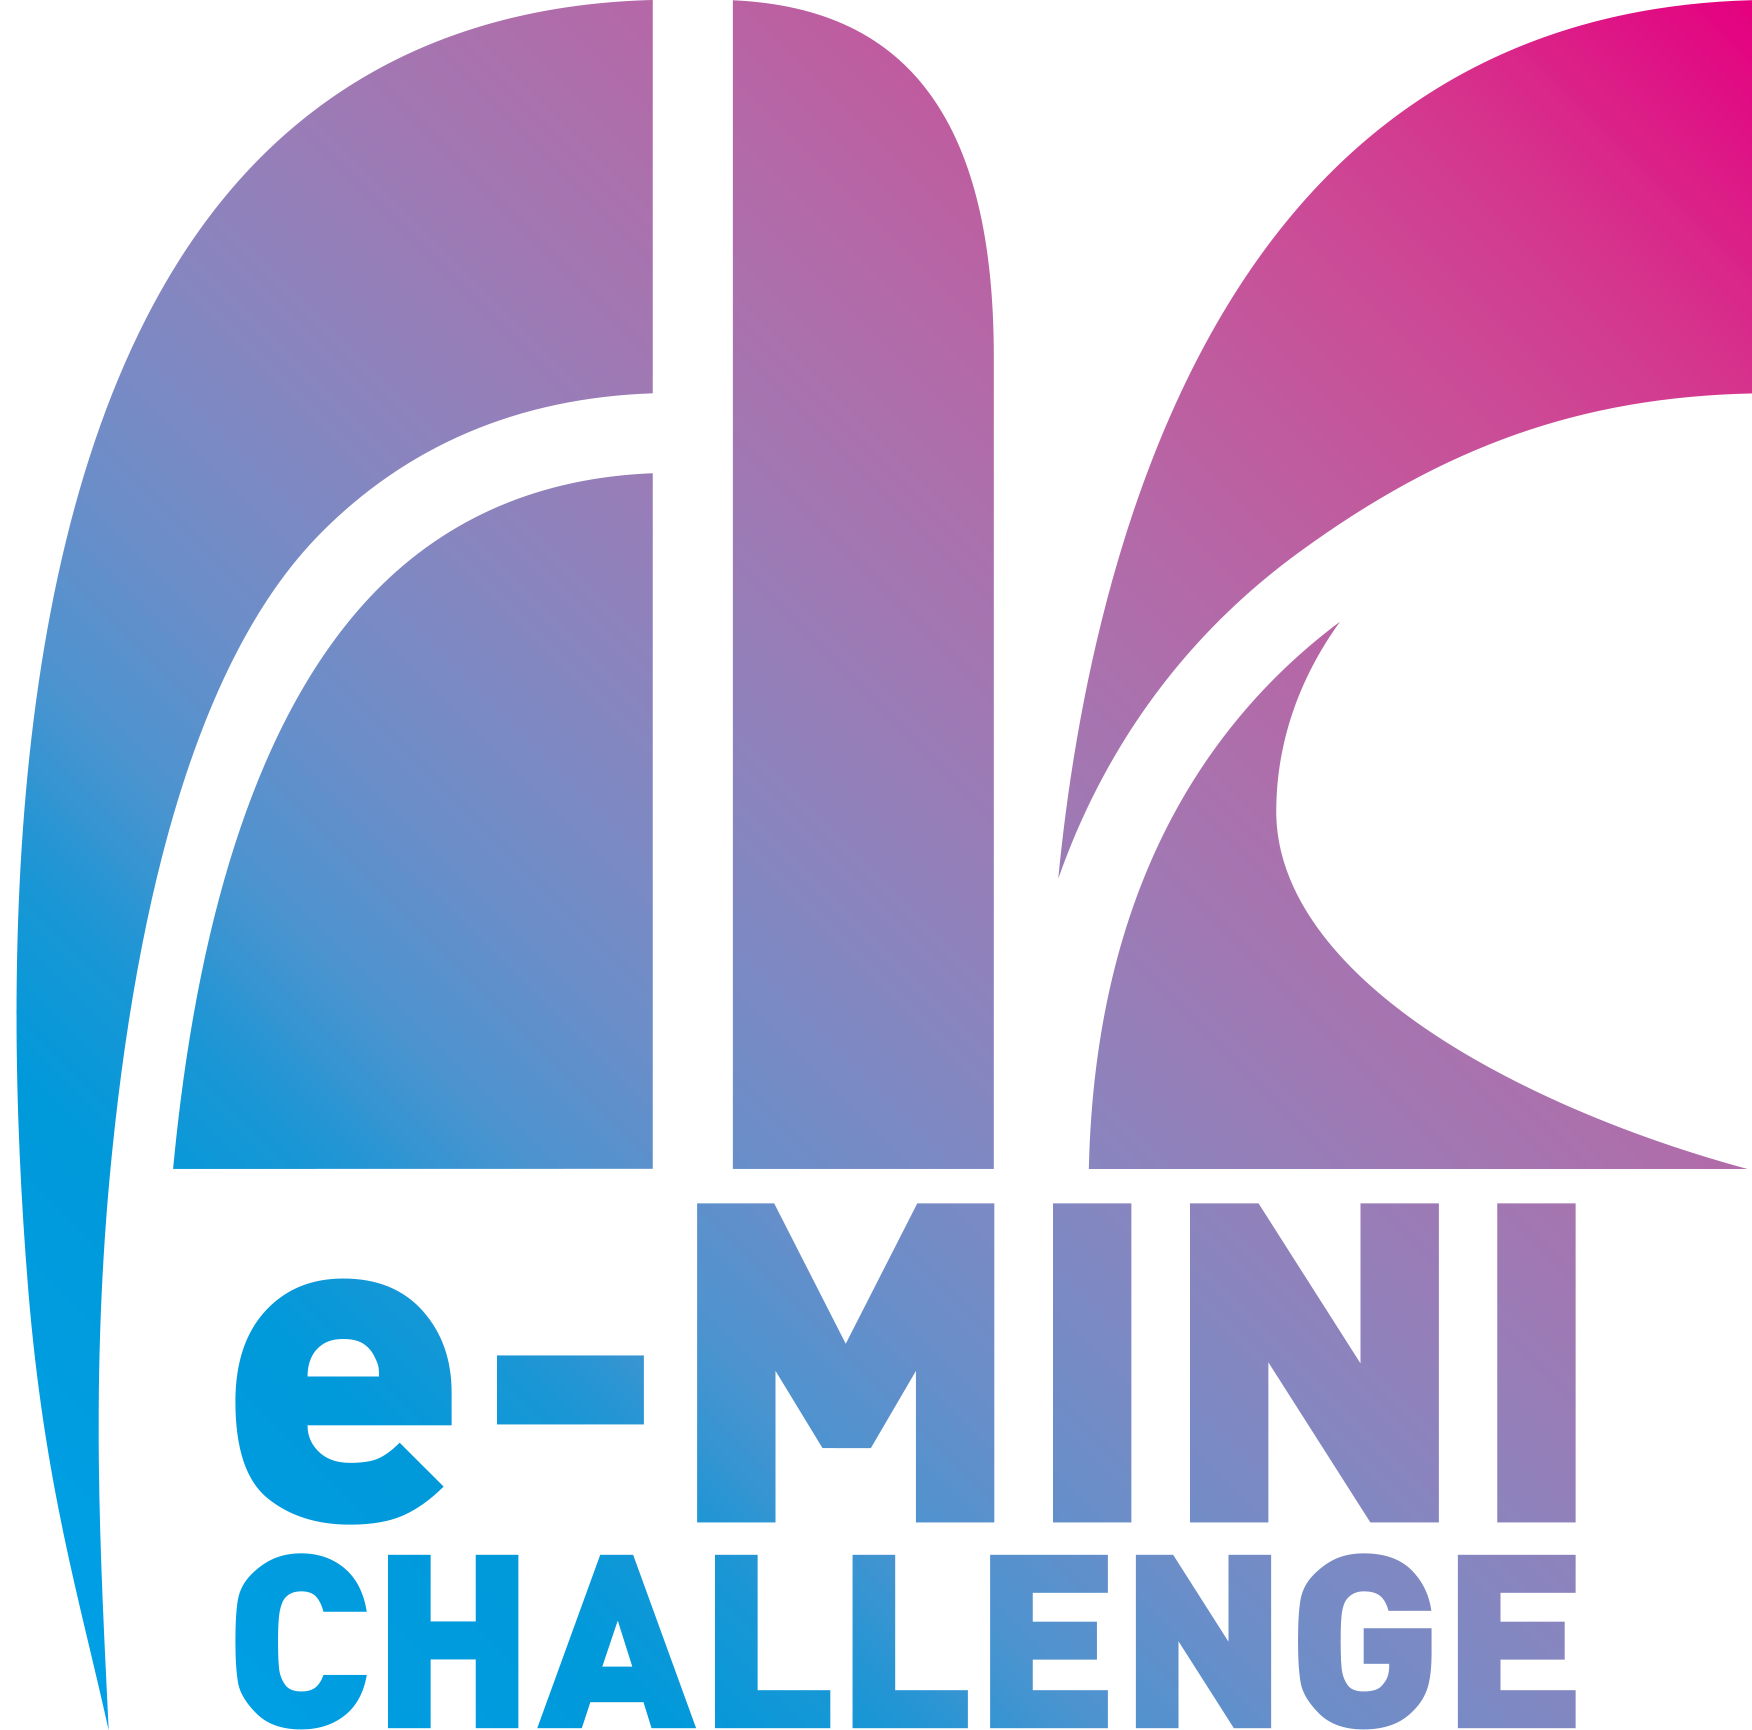 e-MINI CHALLENGE®2022 S1 Rd.5 A/B ポイントランキング公開